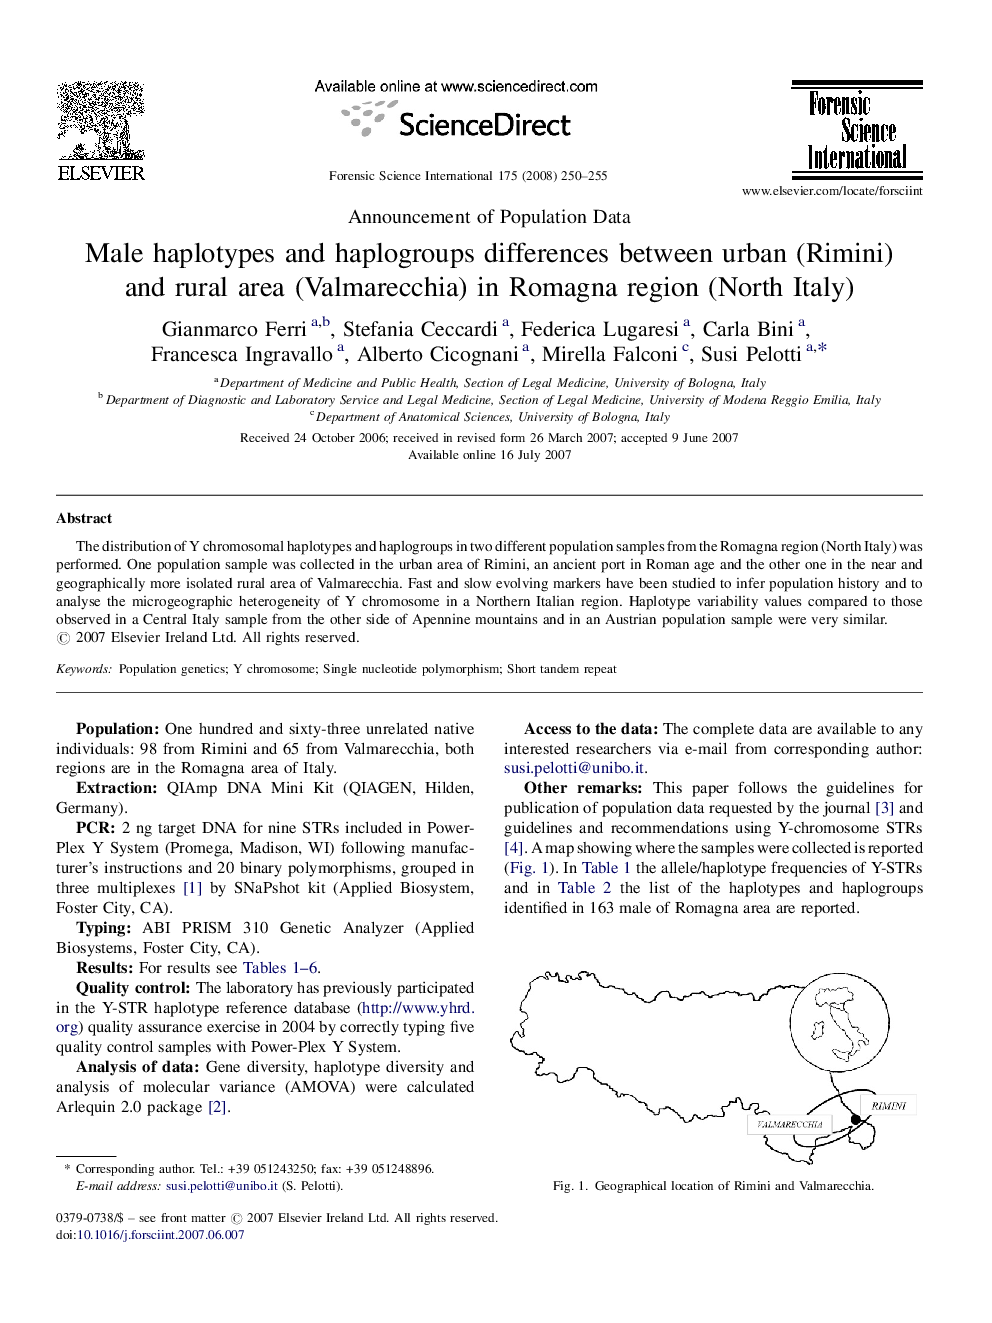 Male haplotypes and haplogroups differences between urban (Rimini) and rural area (Valmarecchia) in Romagna region (North Italy)